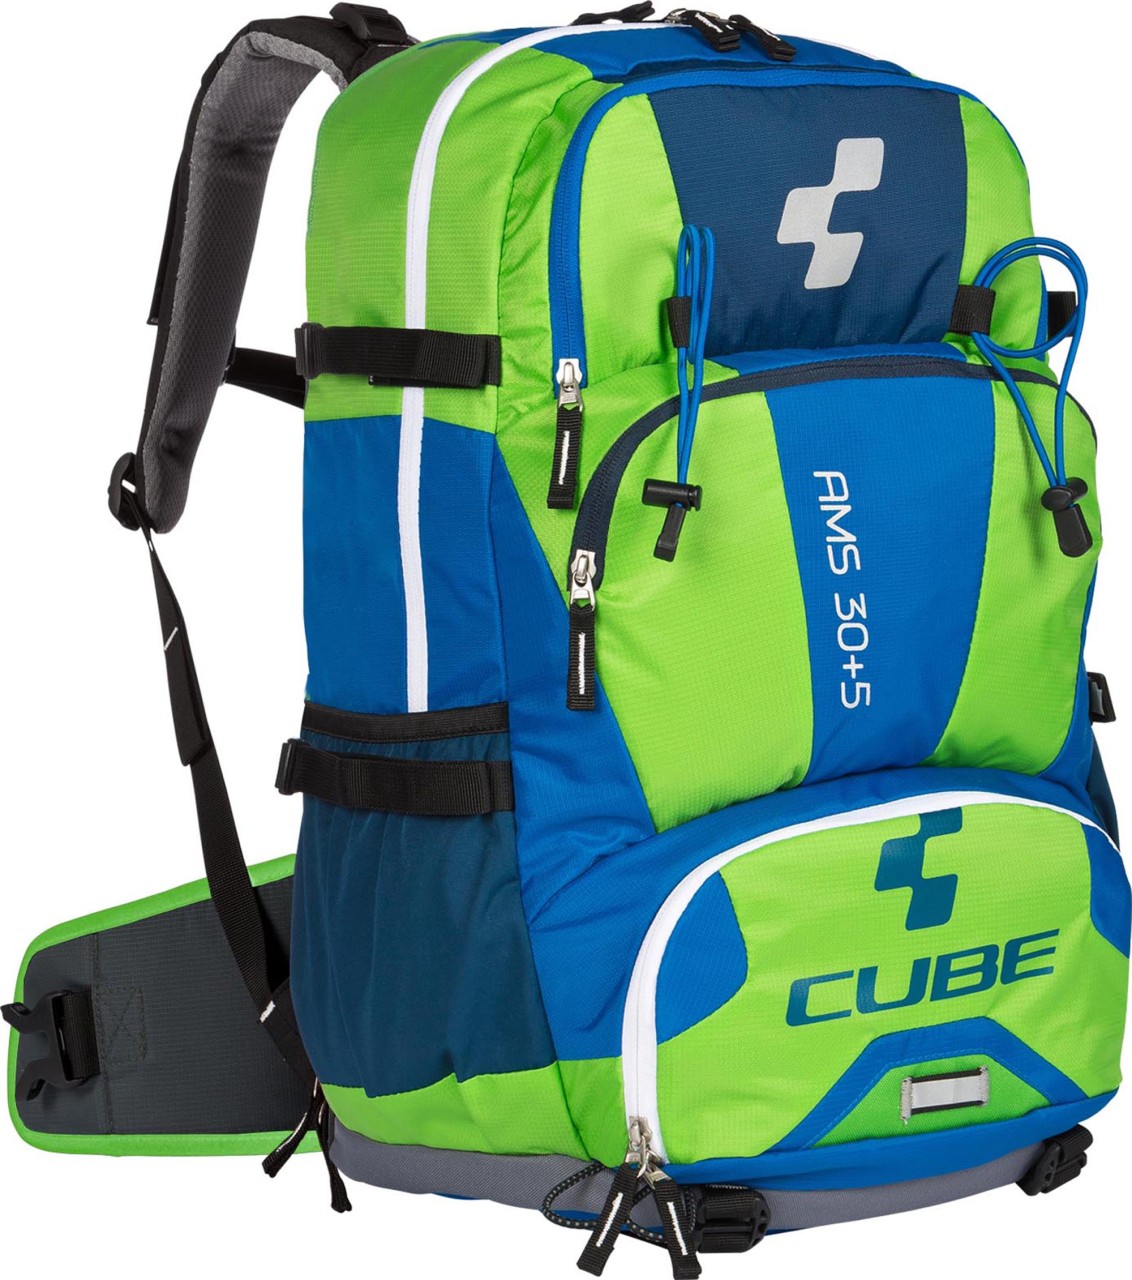 Cube Rucksack AMS 30+5 Volumen: 30+5 Liter blue n green